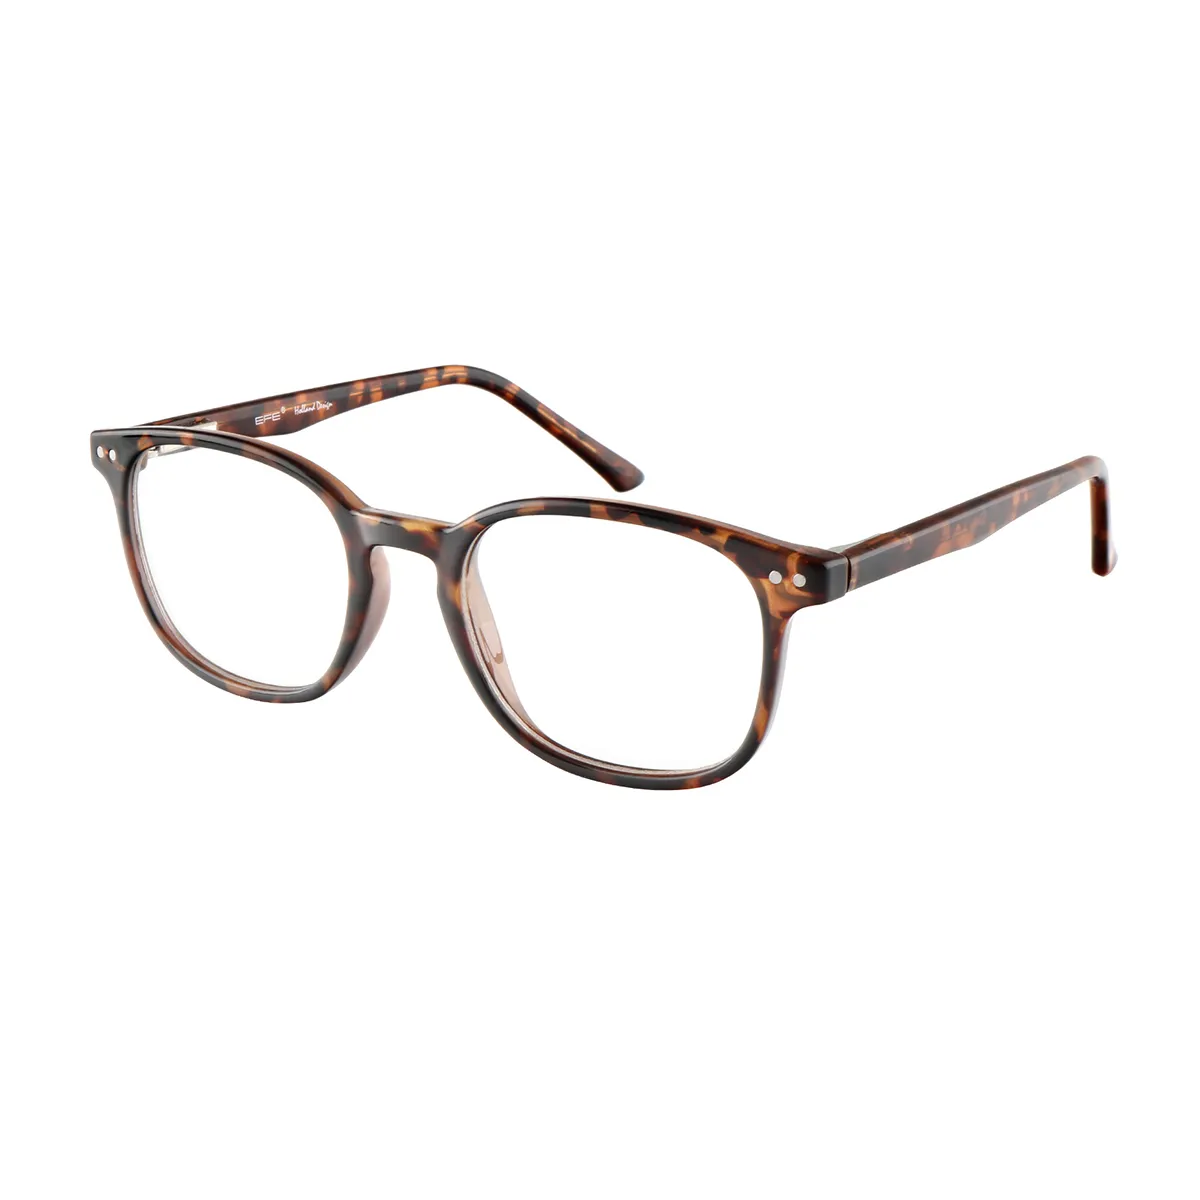 Sanchez - Square Tortoiseshell Glasses for Men & Women - EFE